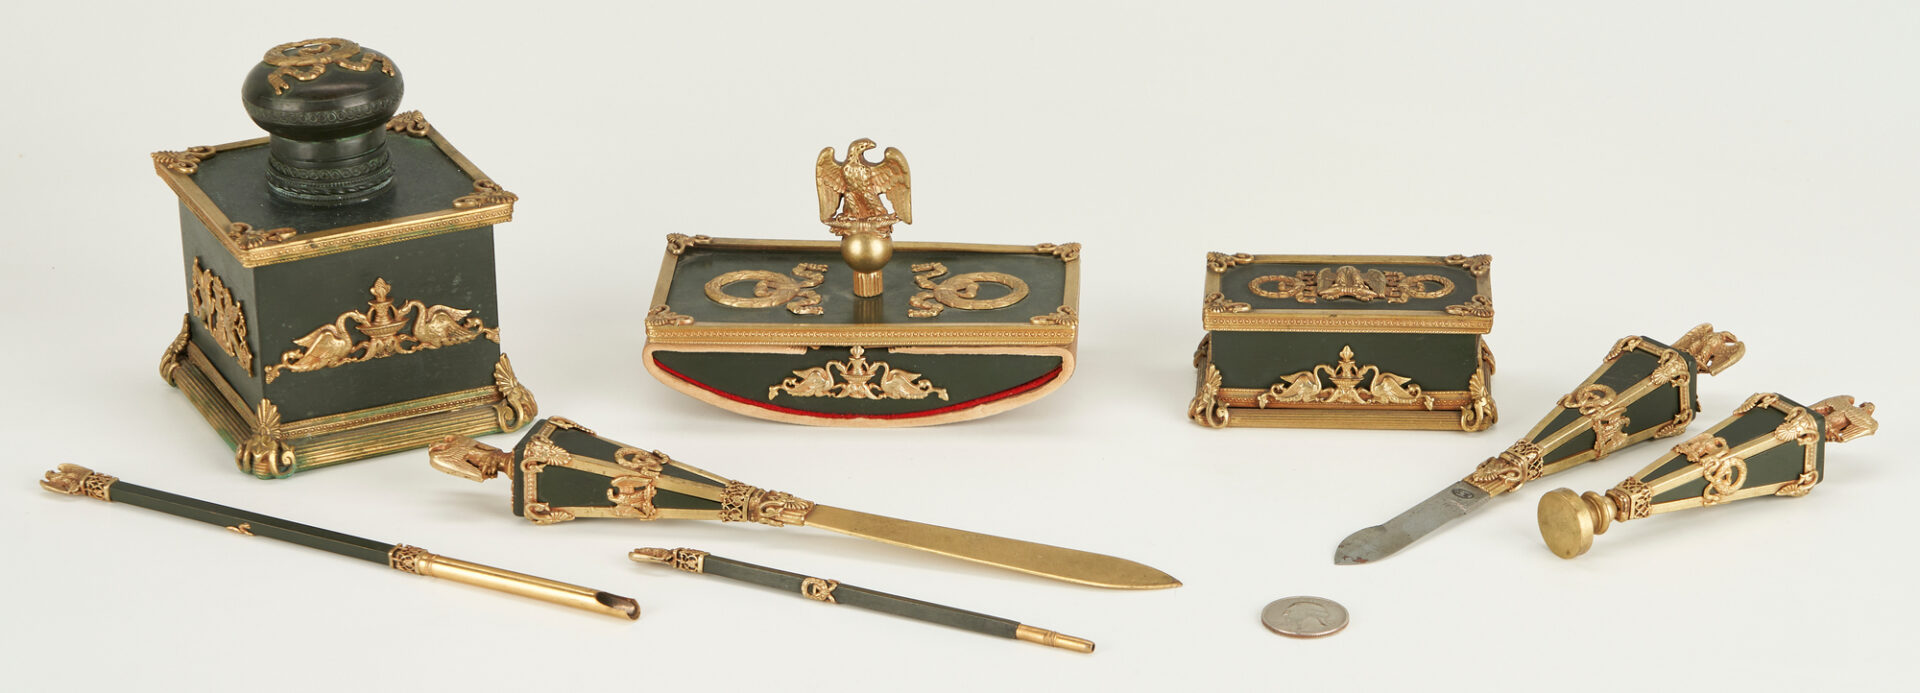 Lot 373: French Empire Bronze Desk Set, Mexican Provenance